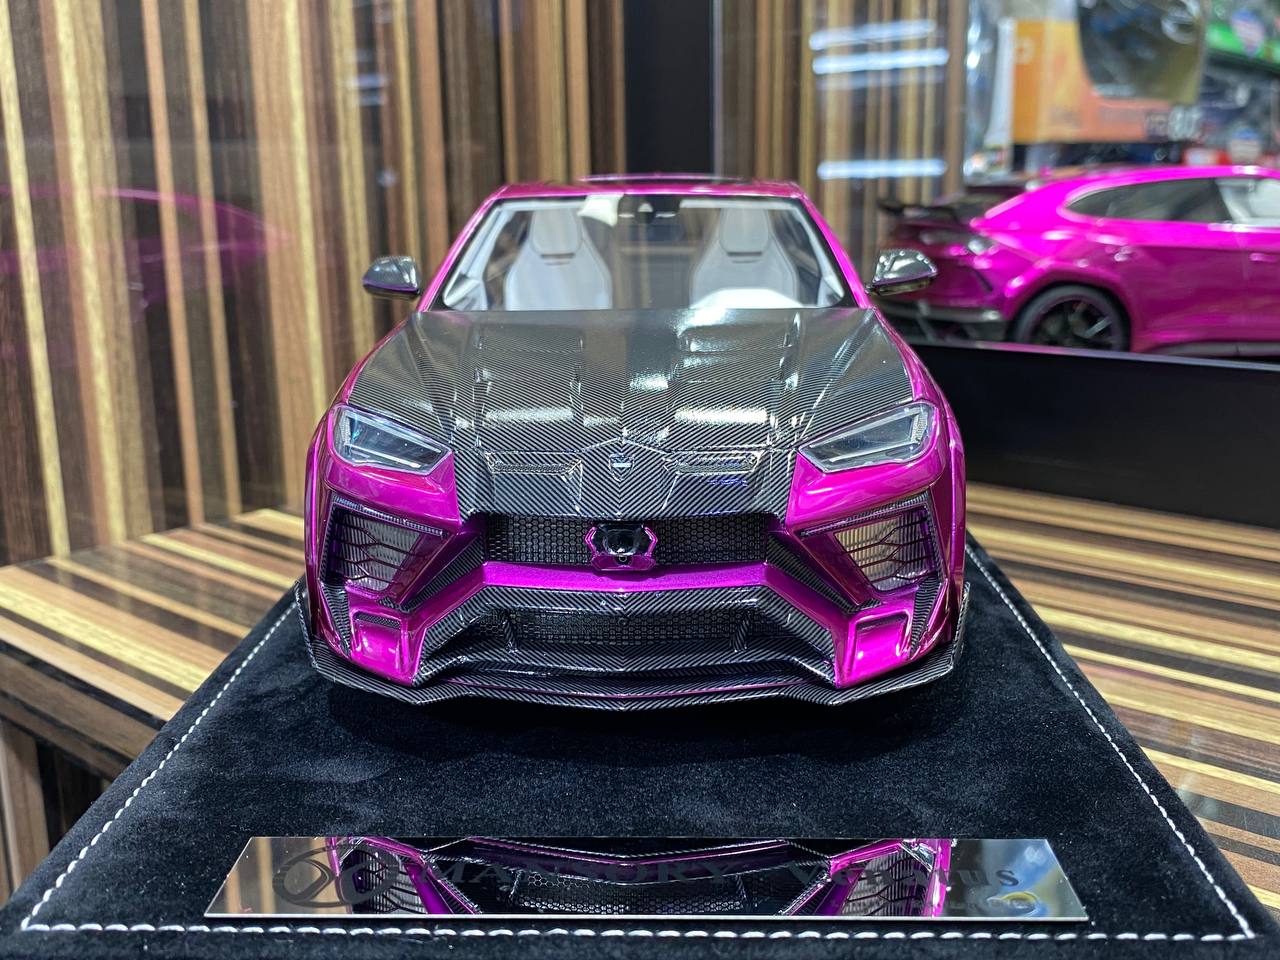 1/18 Timothy & Pierre Lamborghini URUS Venatus Purple Resin Model Car|Sold in Dturman.com Dubai UAE.